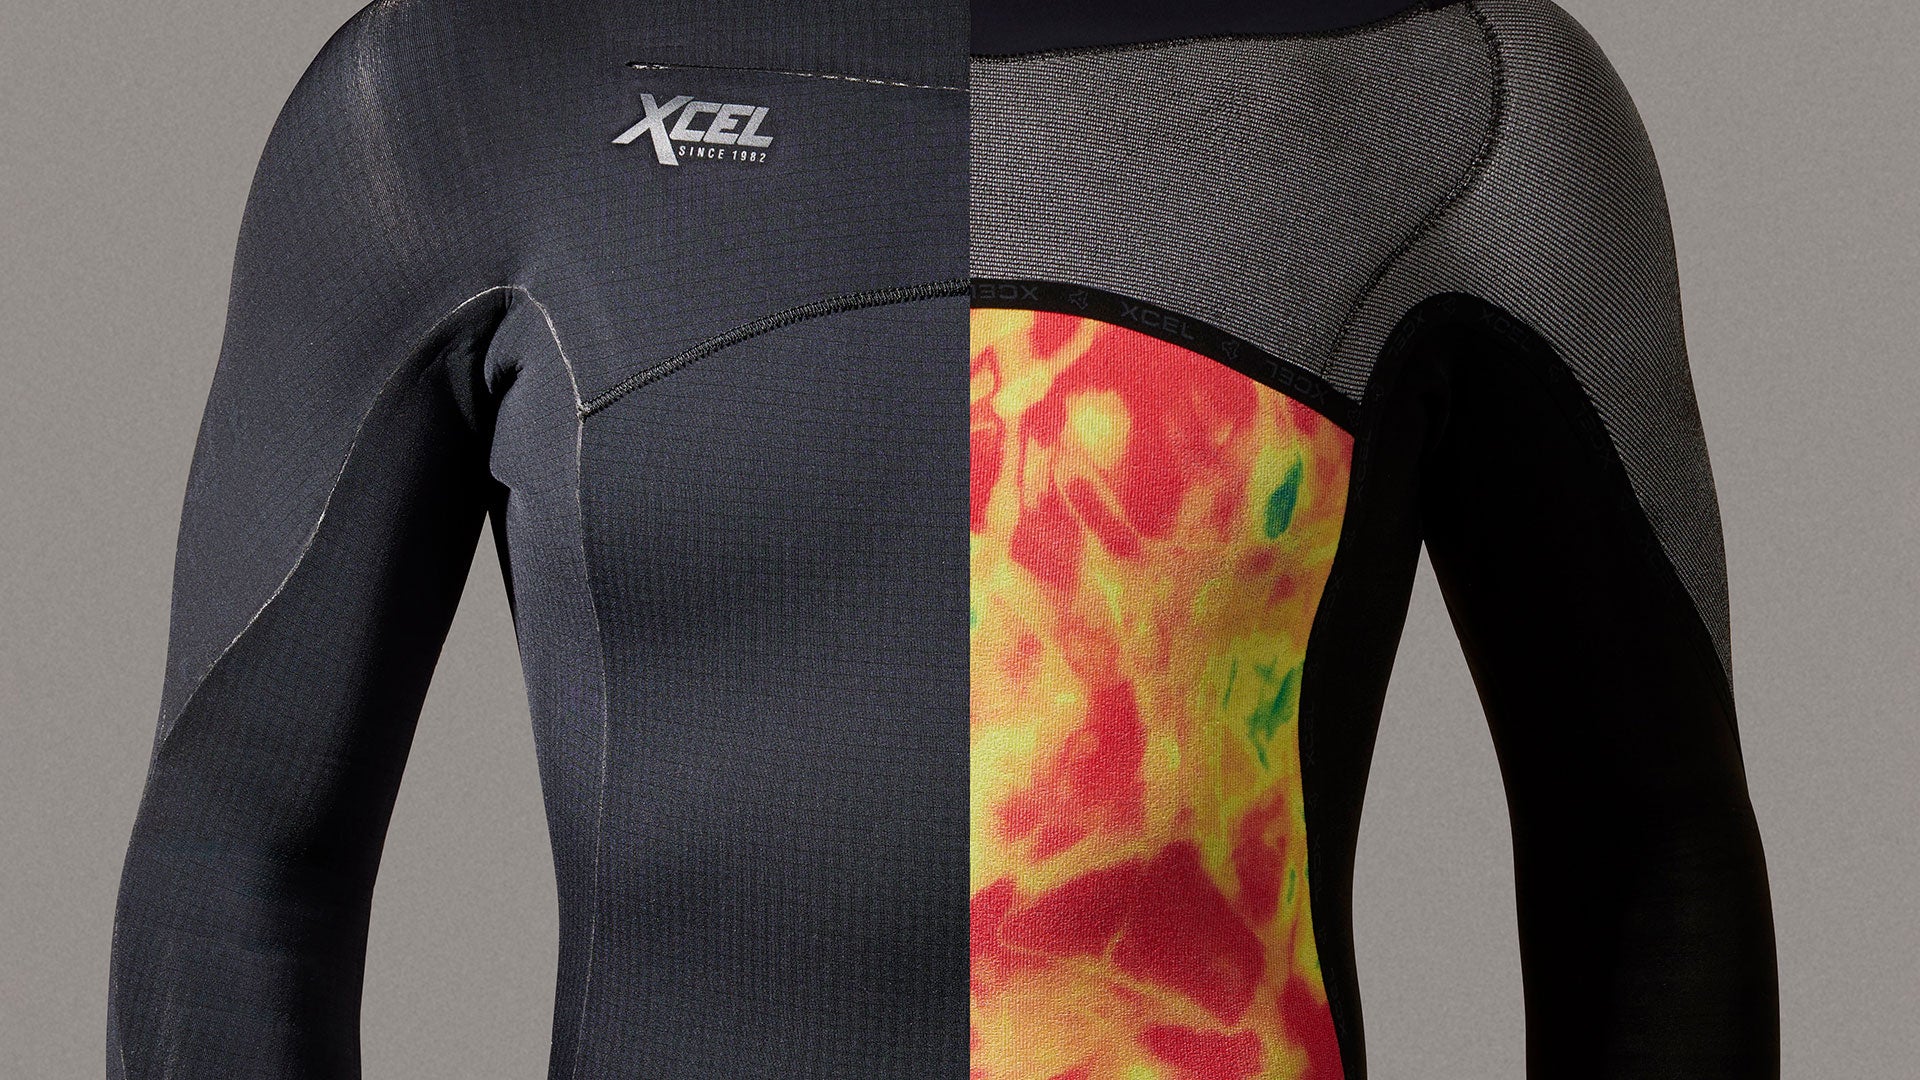 Comp X wetsuit cross-section 